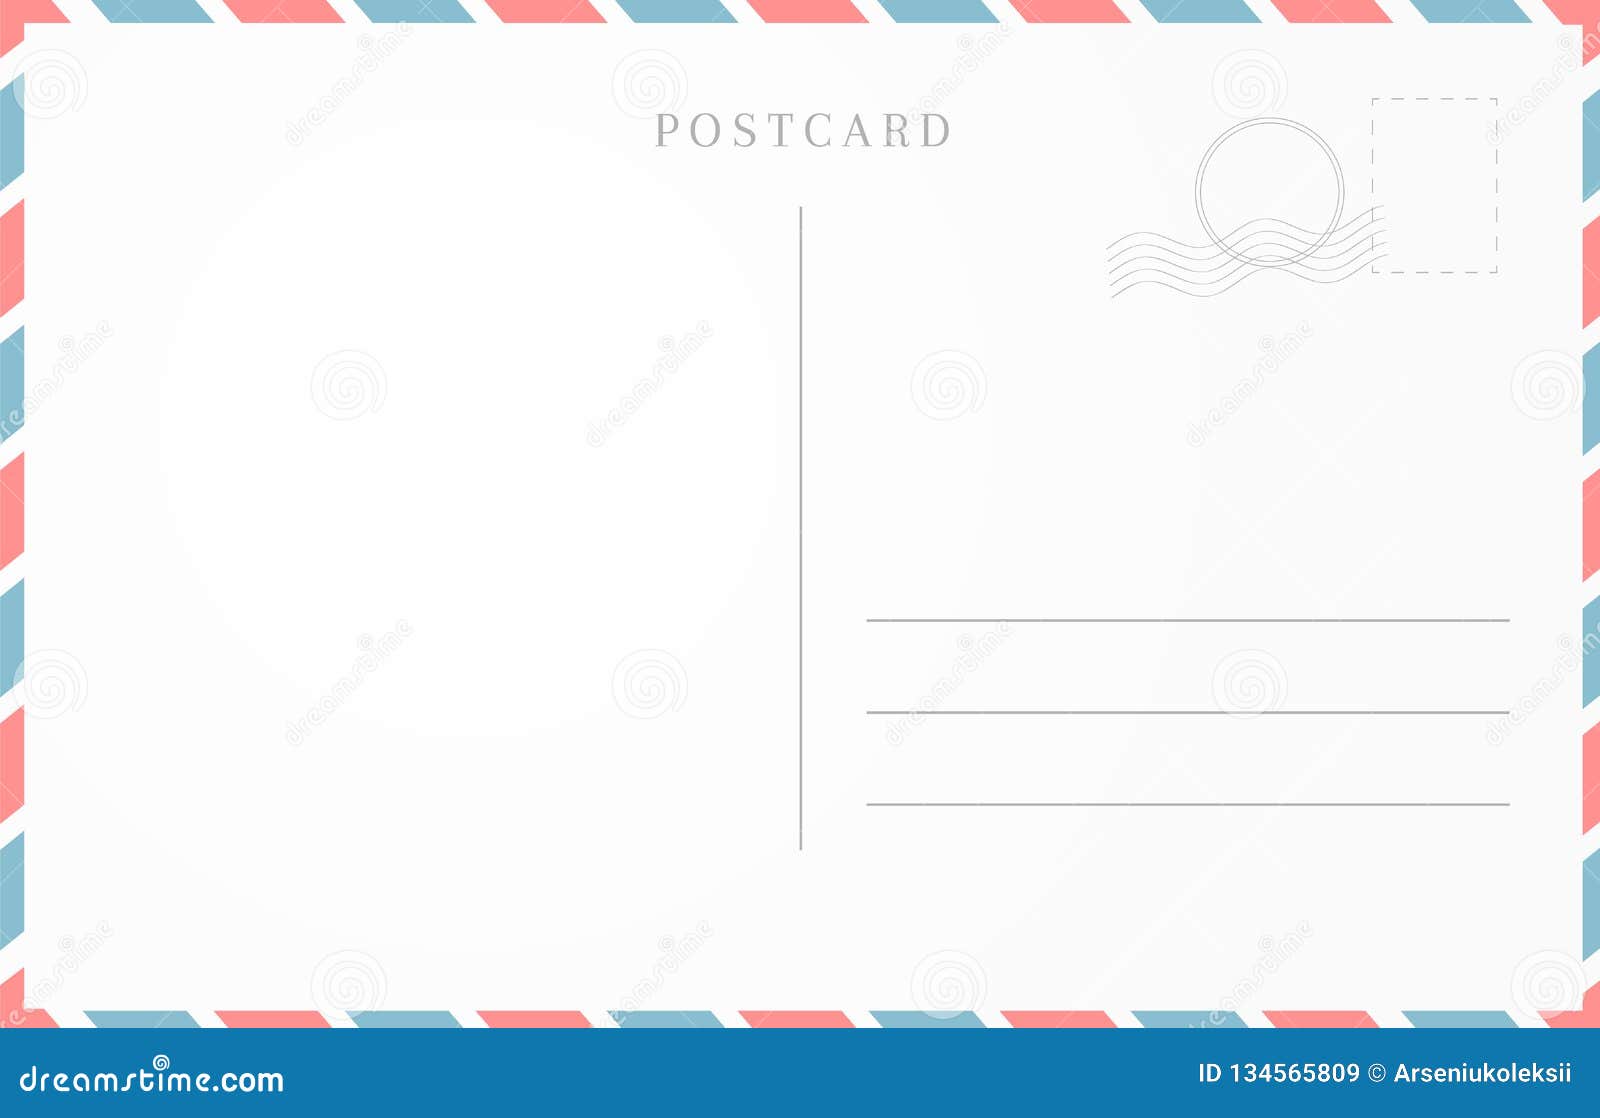 vintage-travel-card-design-blank-postcard-template-stock-vector